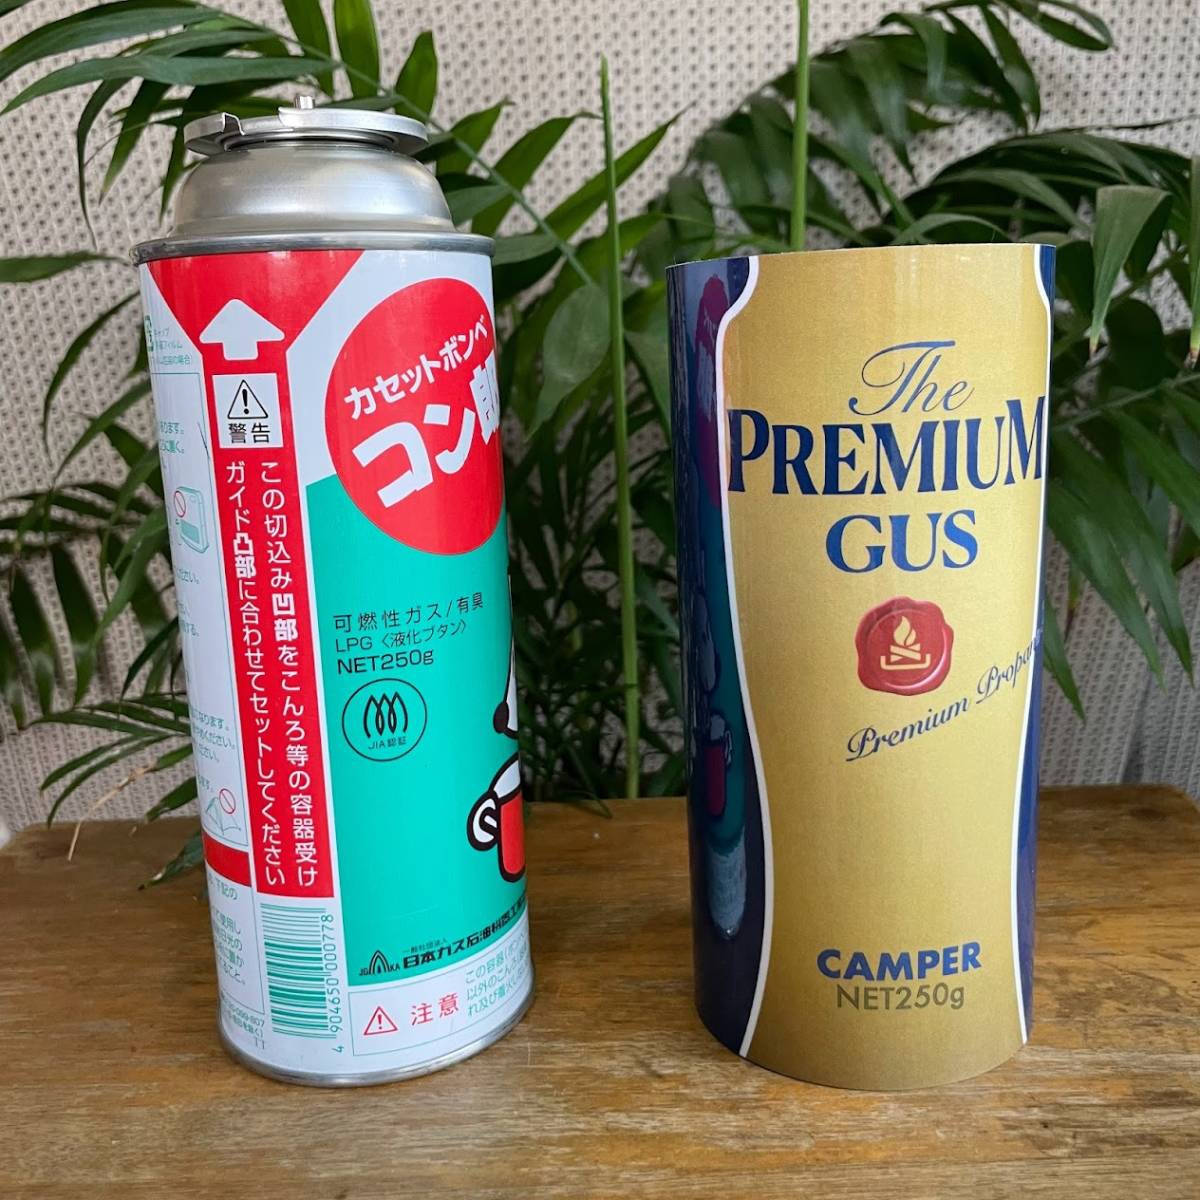 CB缶(カセットガス)マグネットカバー★シェリカン&プレミアムビール